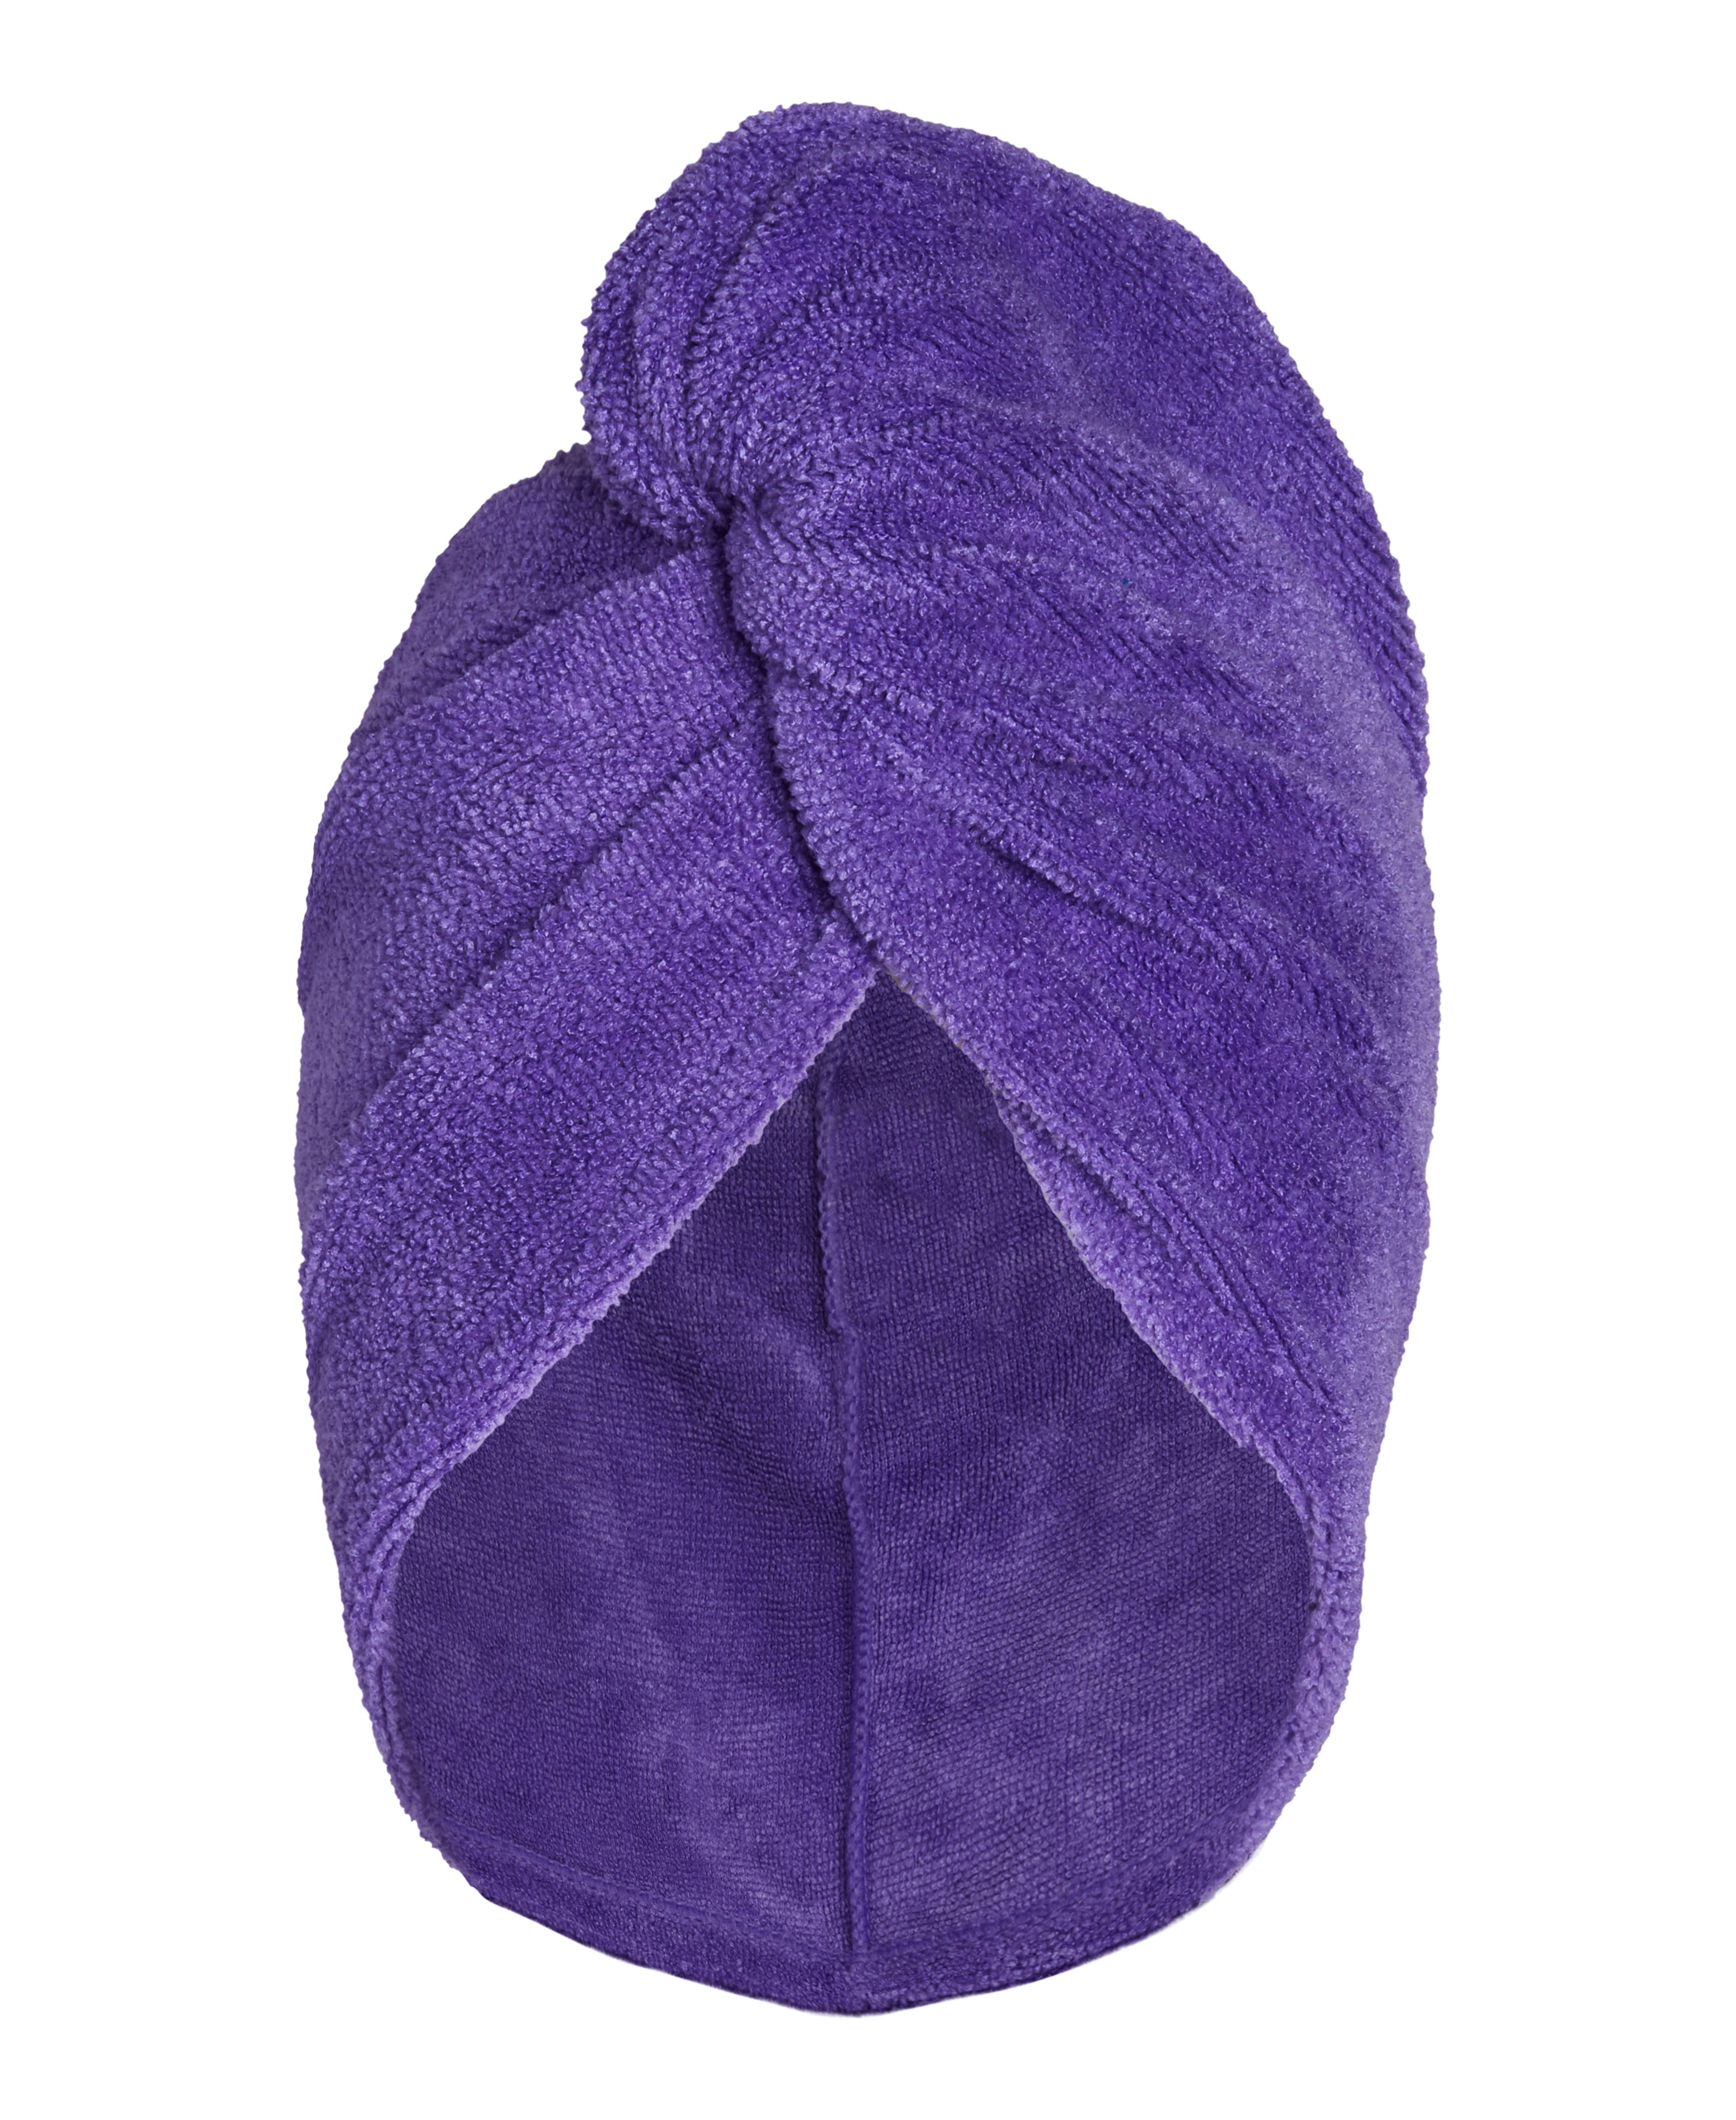 Turbie Twist the Original Microfiber Super-Absorbent Hair Towel, Colors May Vary - image 4 of 6